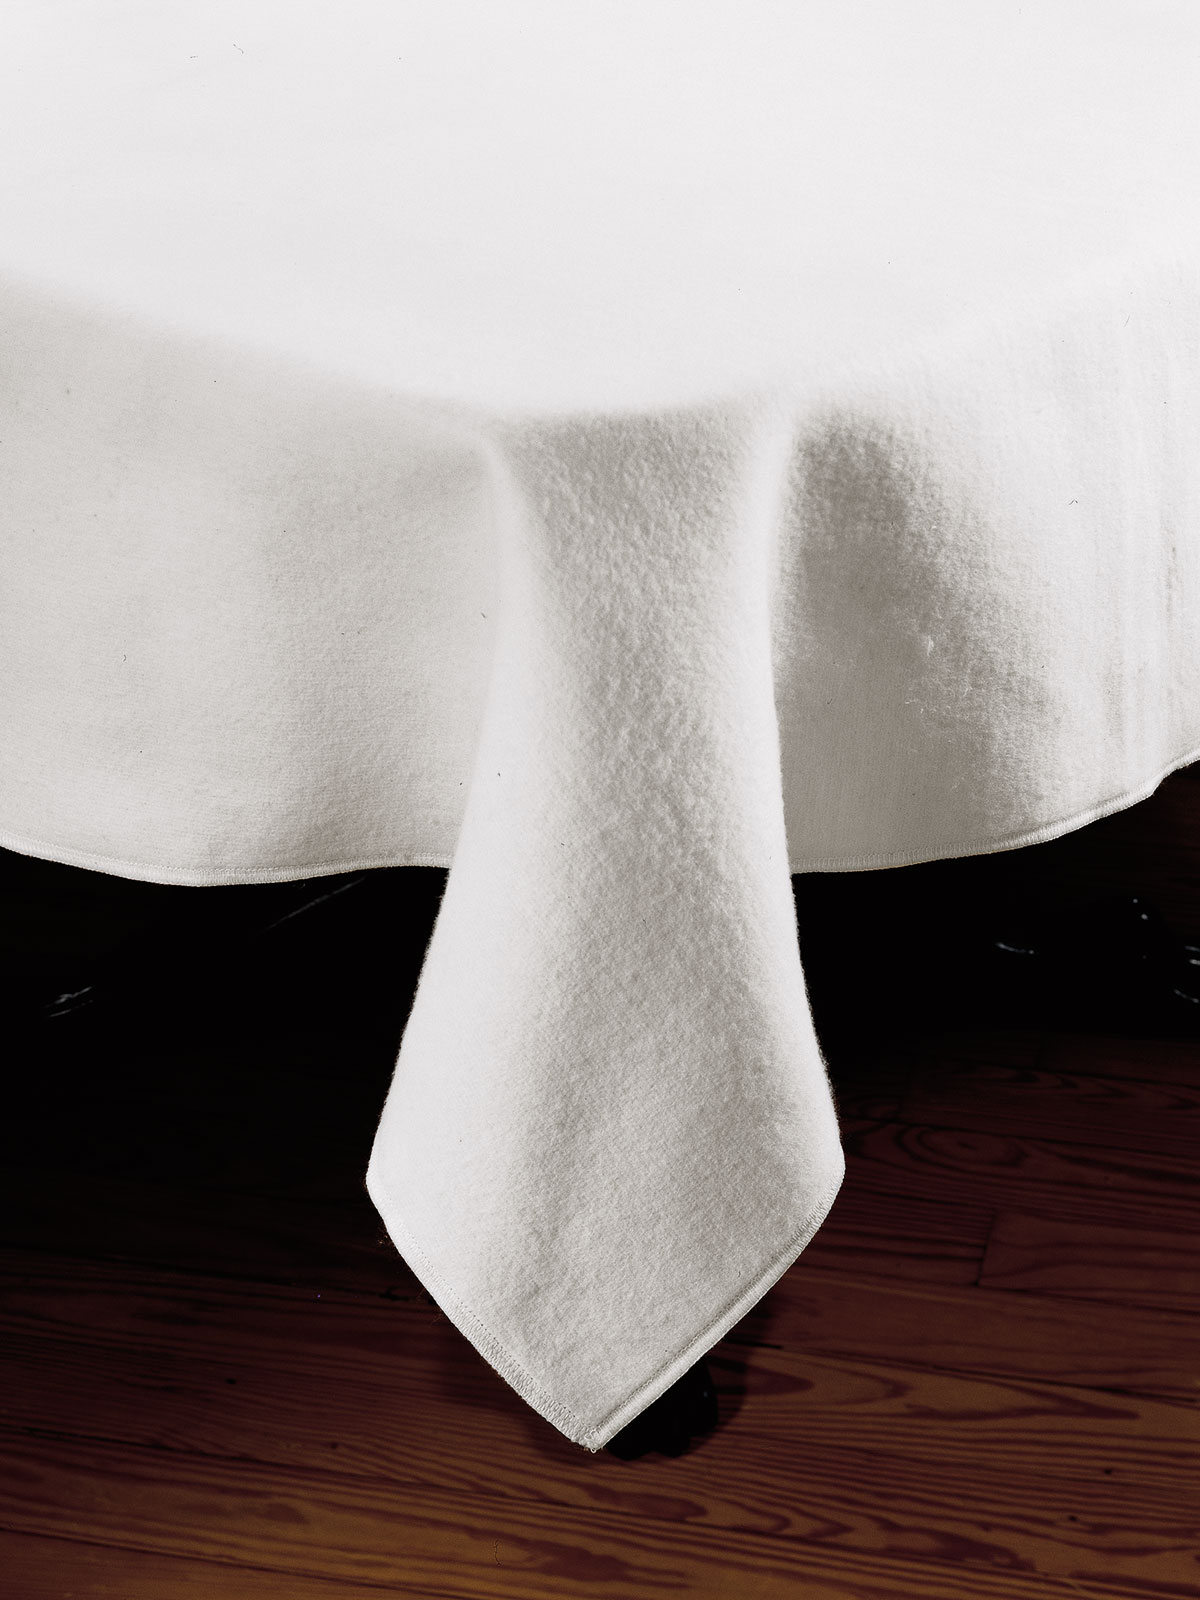 white table linens